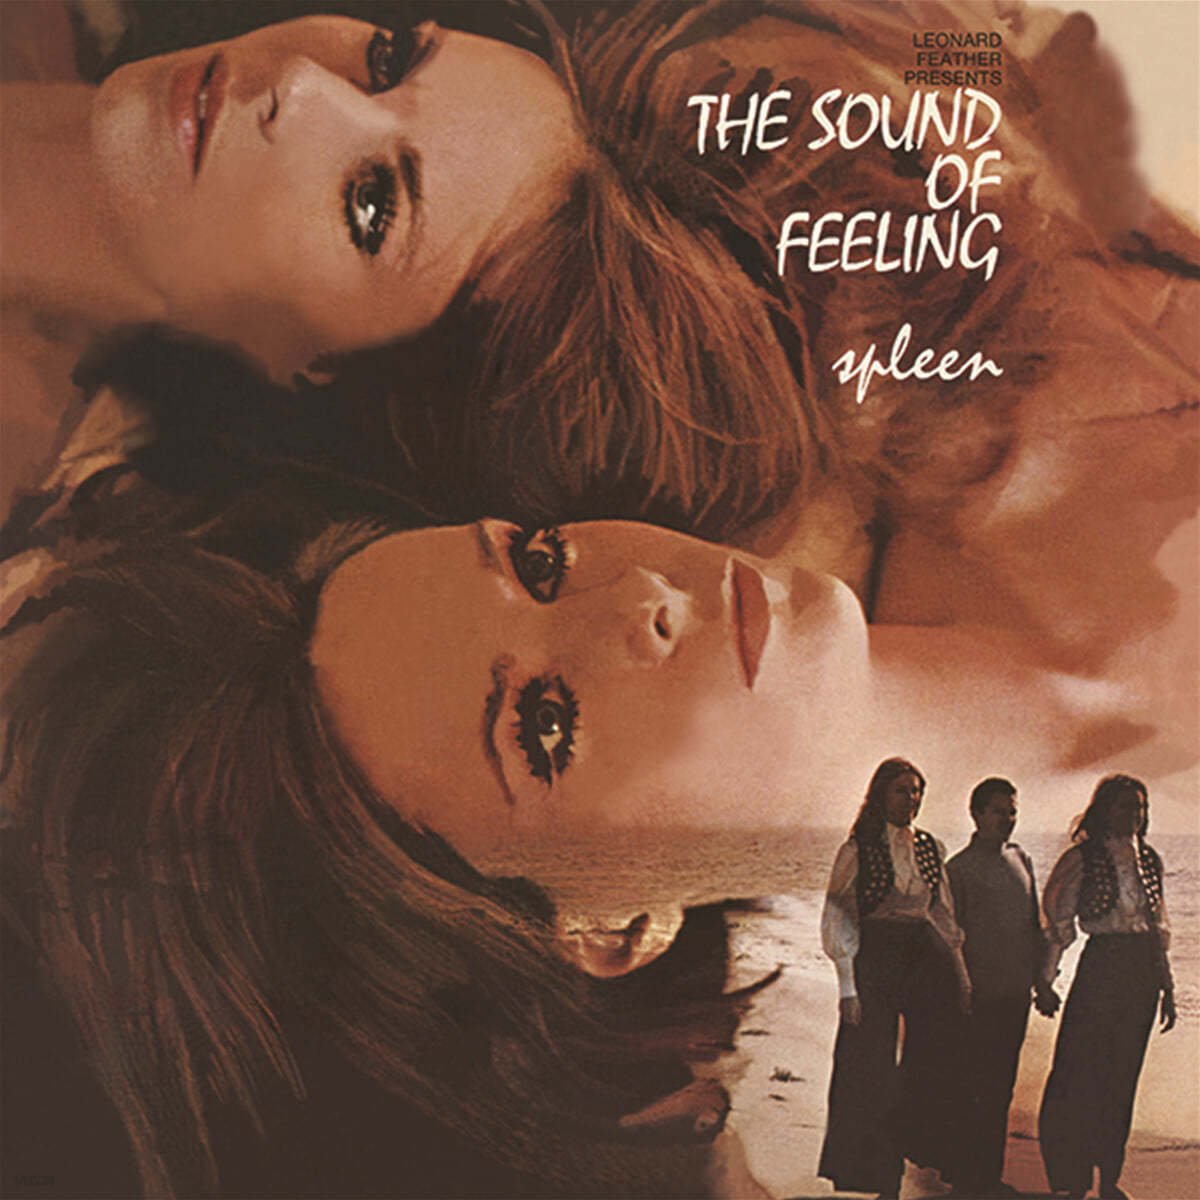 The Sound Of Feeling (더 사운드 오브 필링) - Spleen